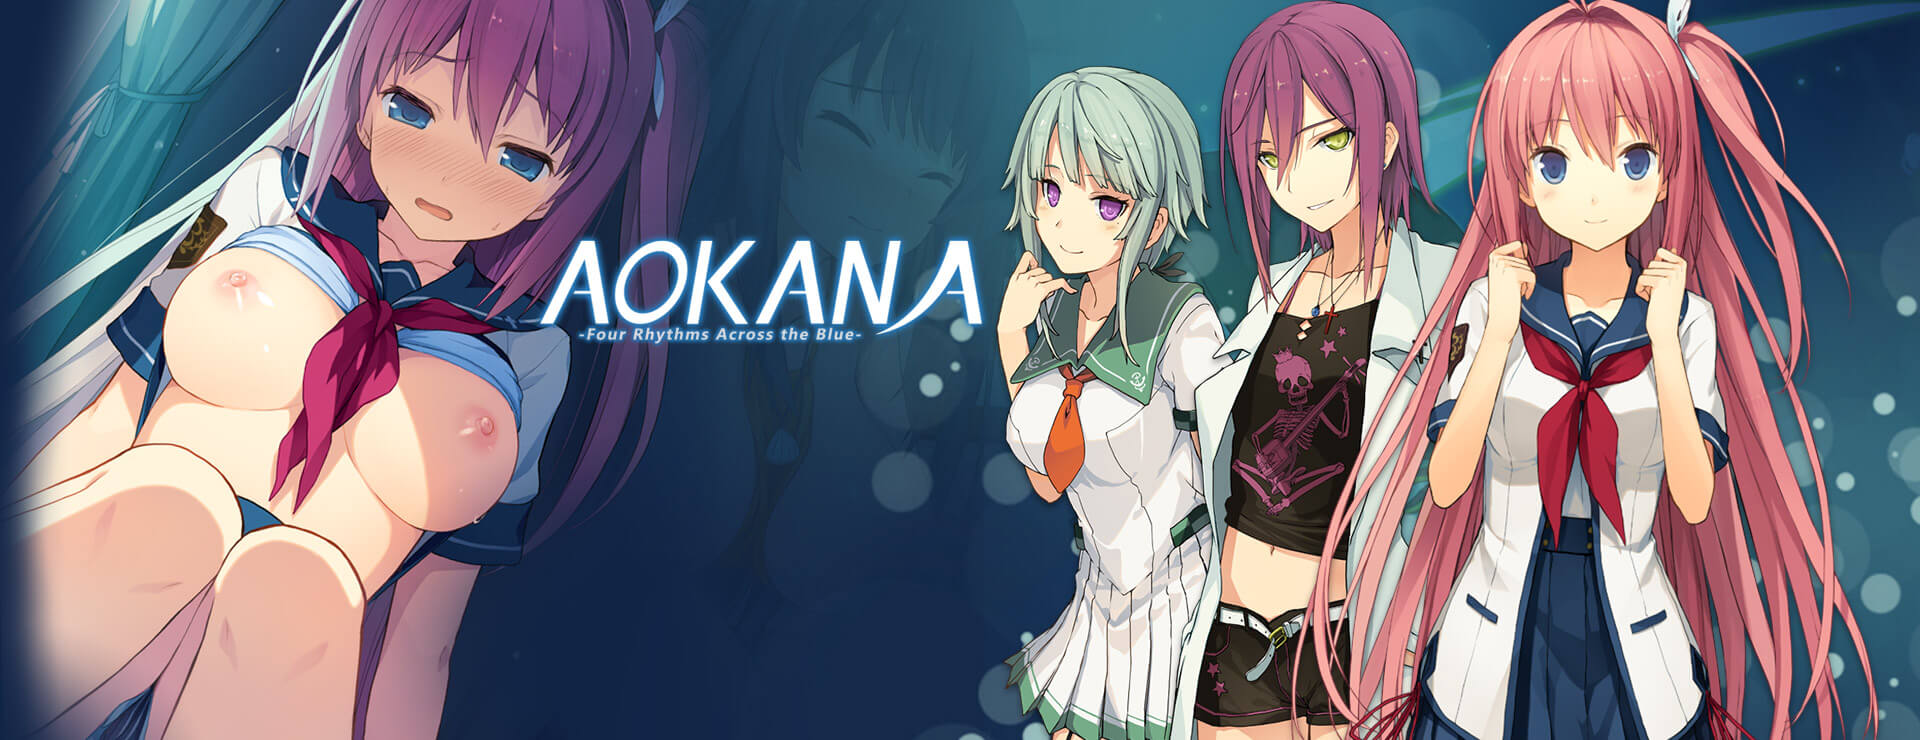 Aokana - Four Rhythms Across the Blue - Novela Visual Juego